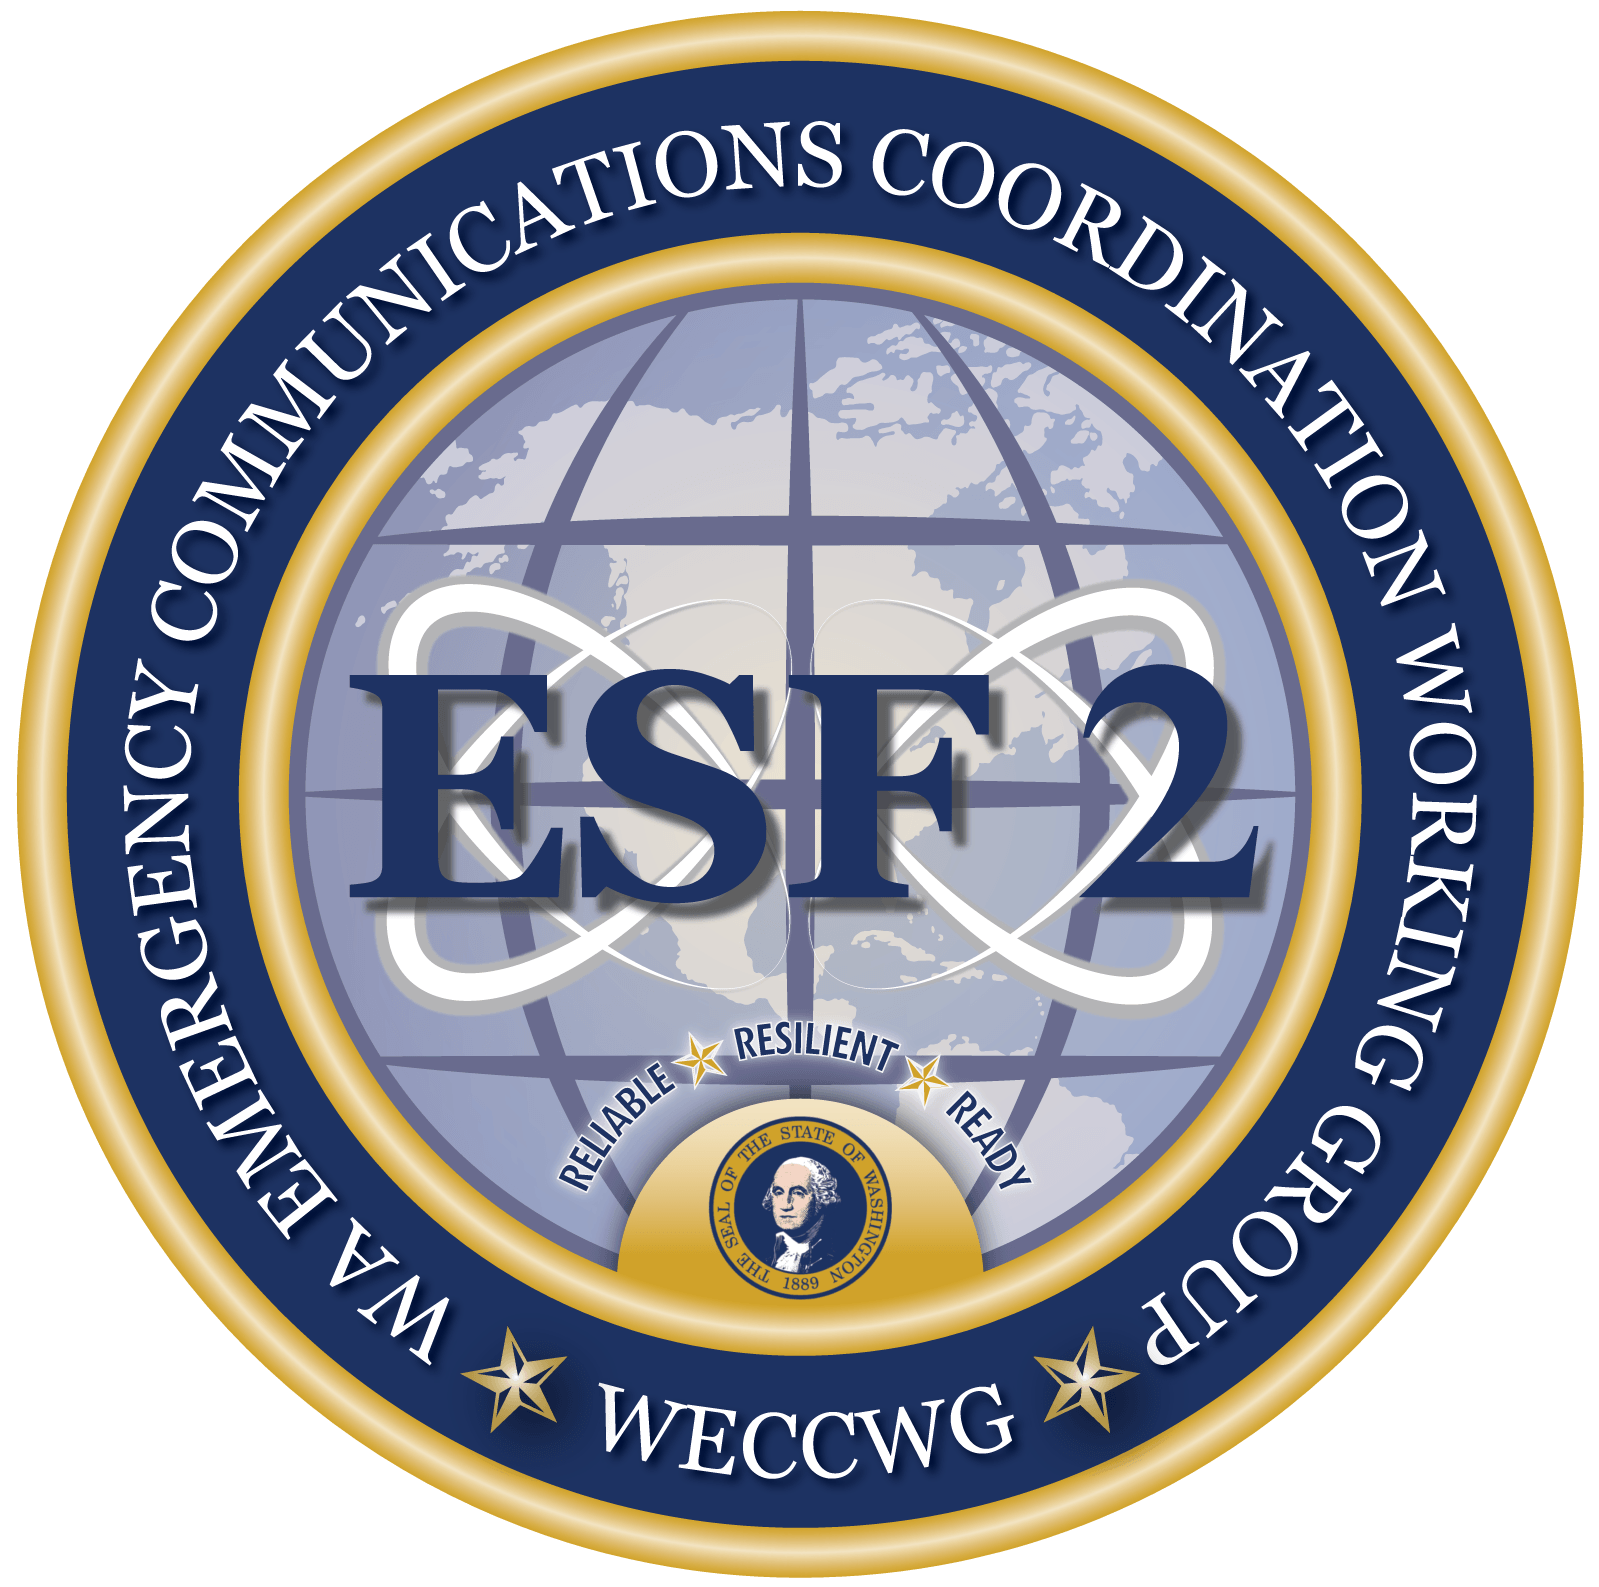 Military Communications Logo - Washington Emergency Communications Coordination Working Group